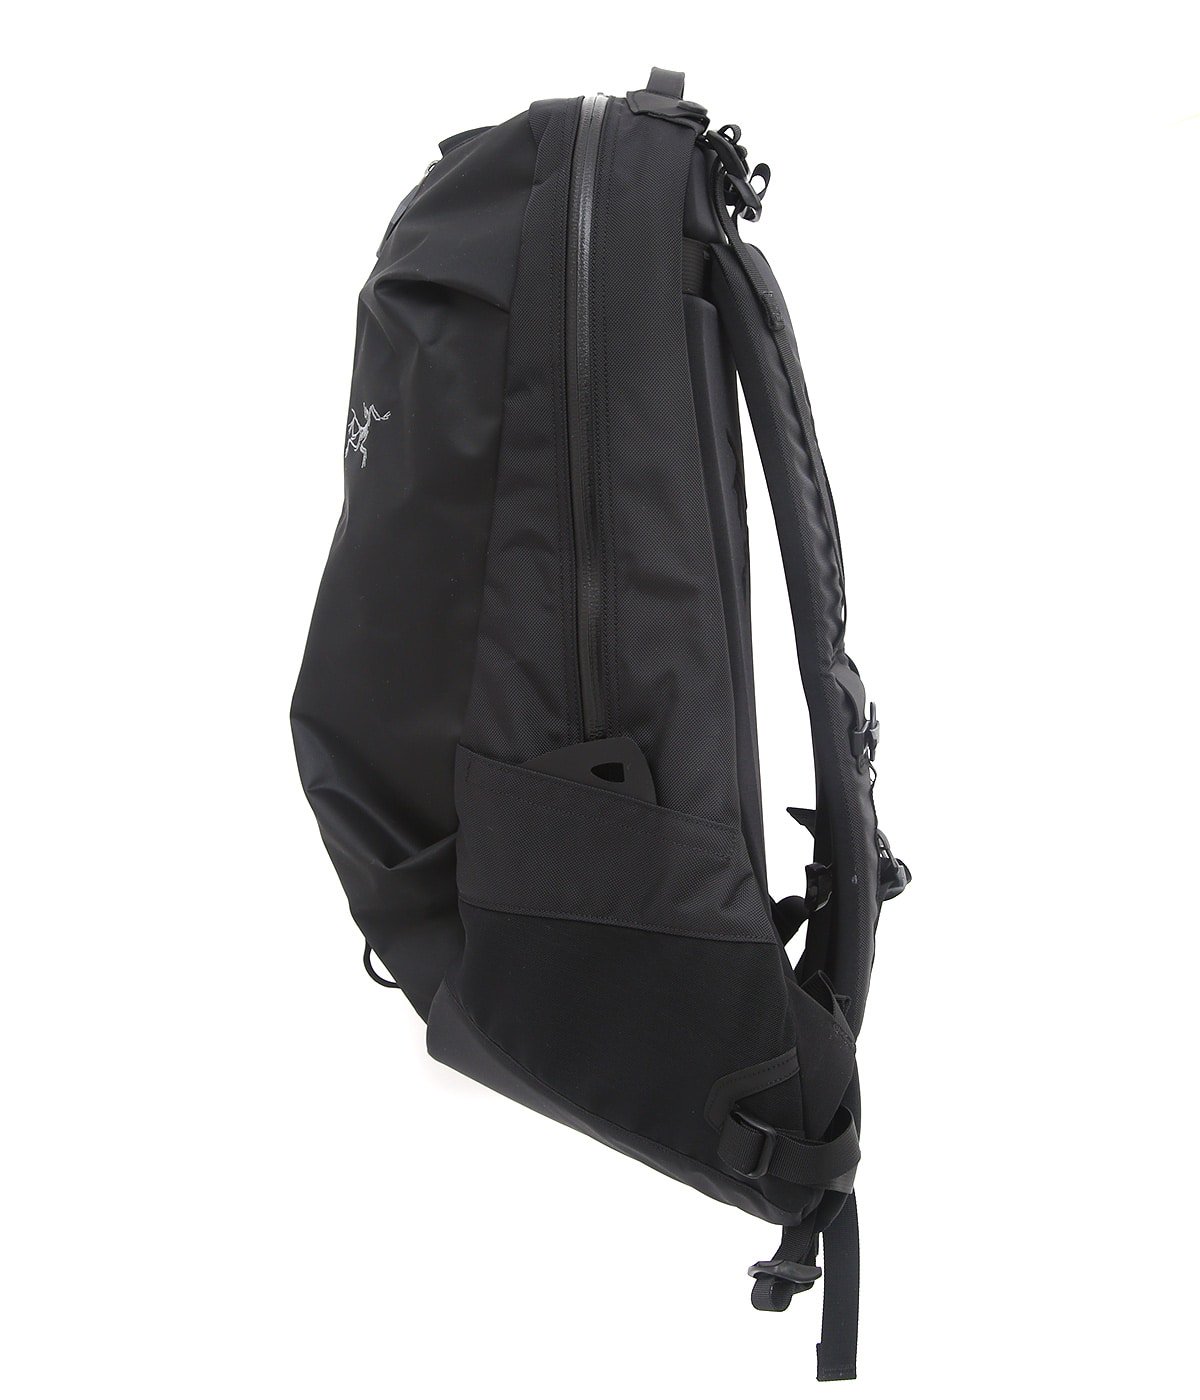 Arro 22 Backpack